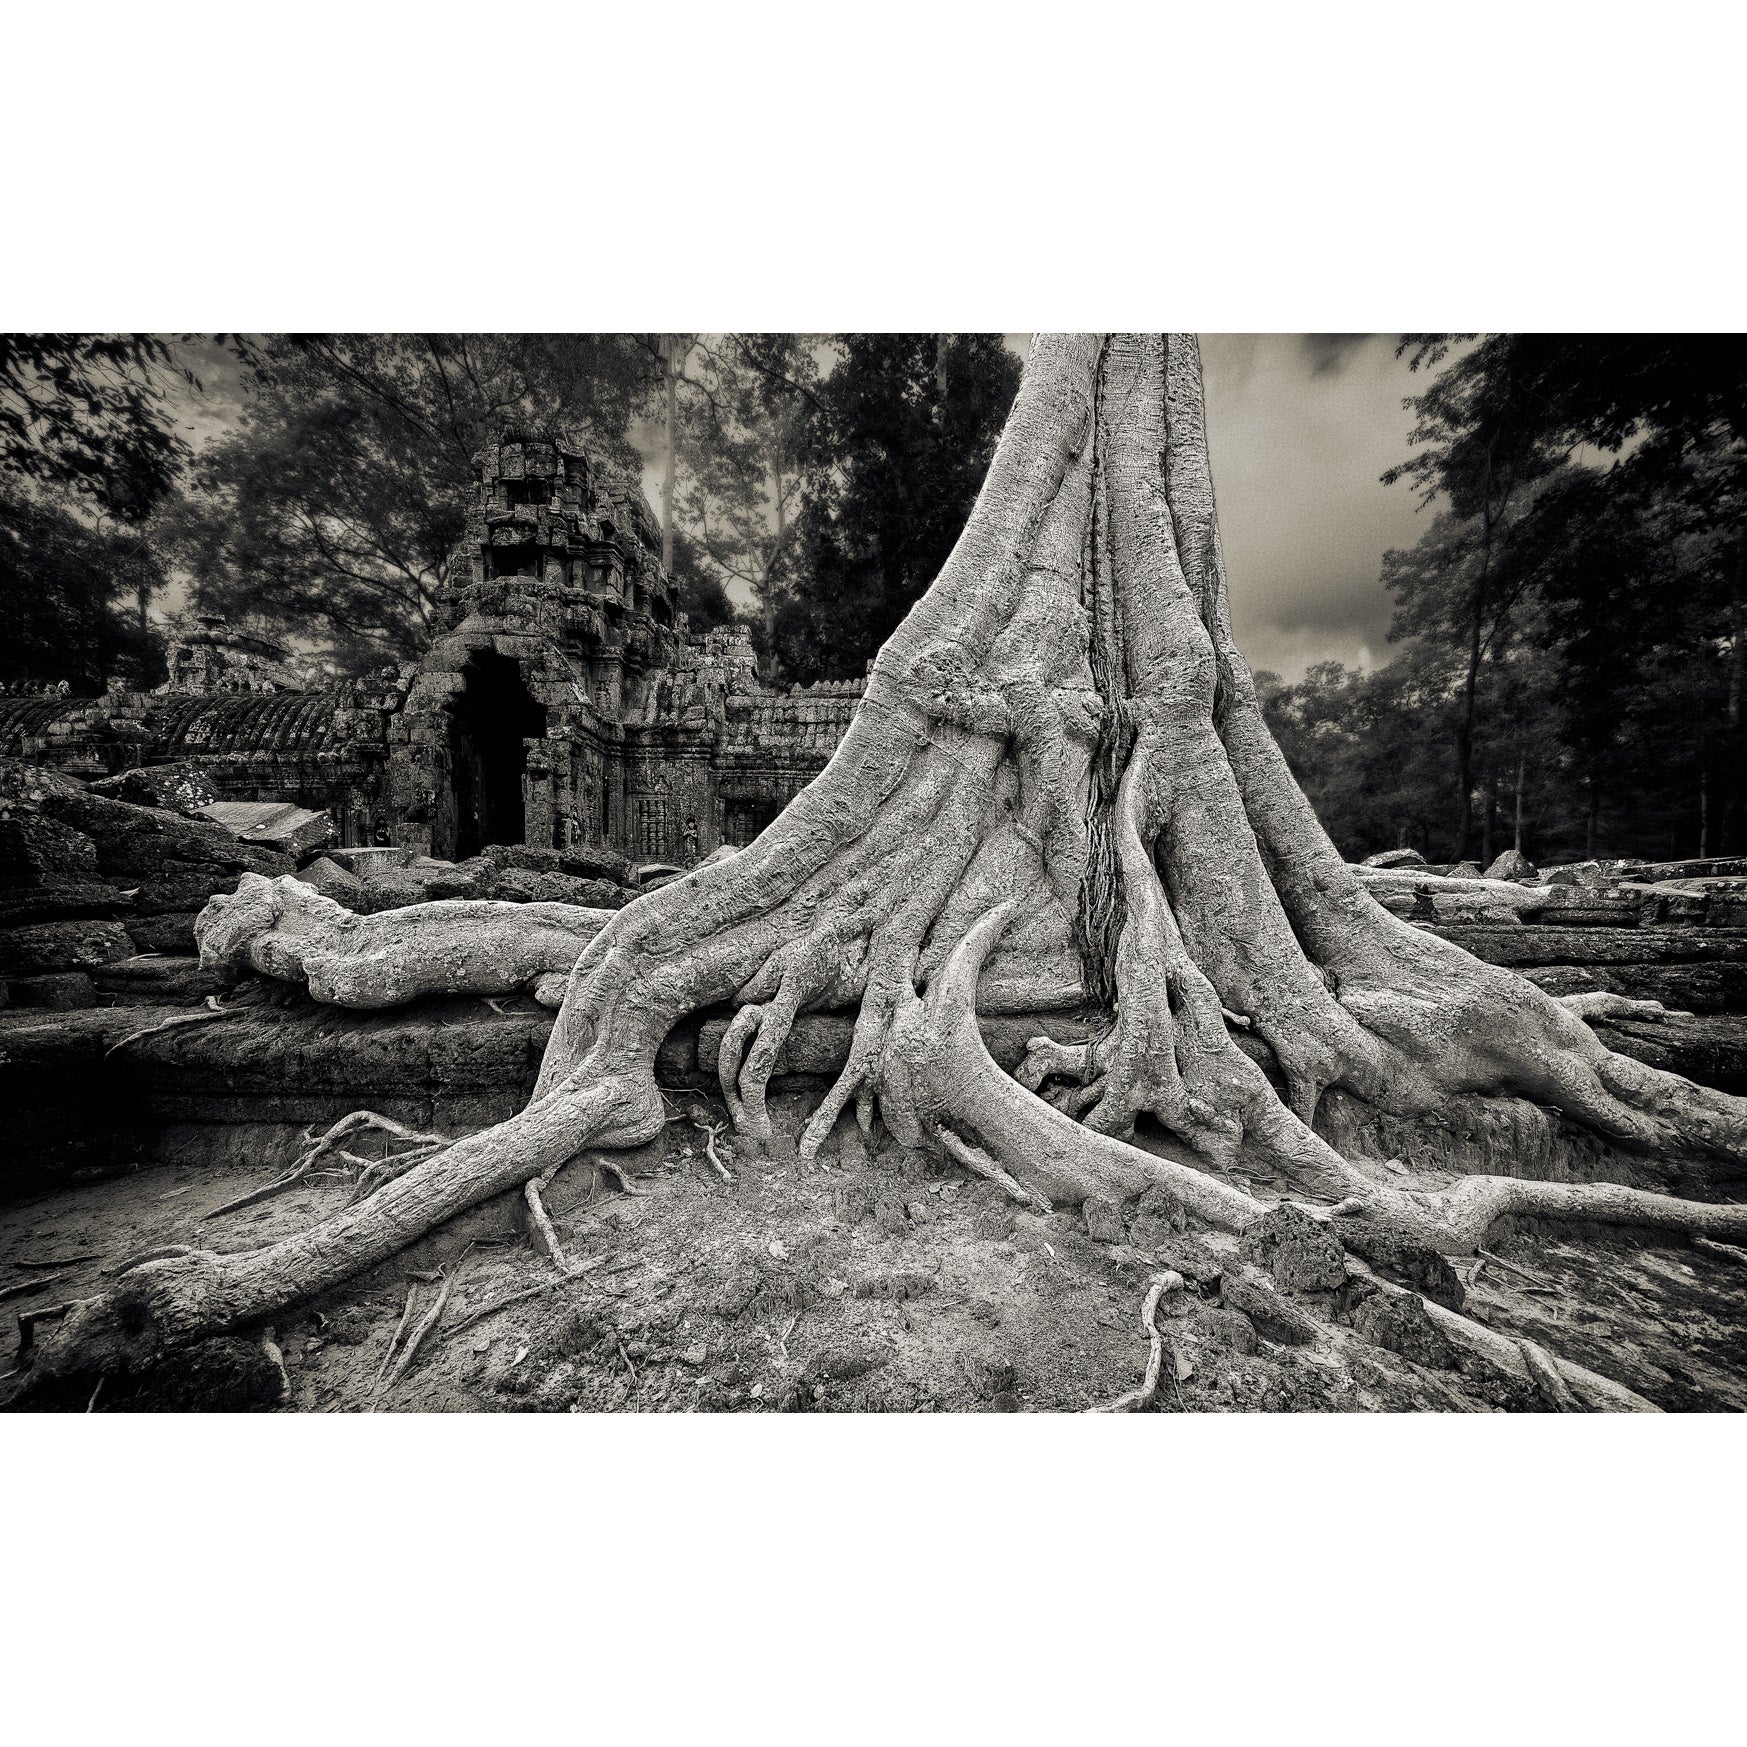 Spung Tree, Ta Nei Temple, Angkor, Cambodia. 2022 by Lucas Varro